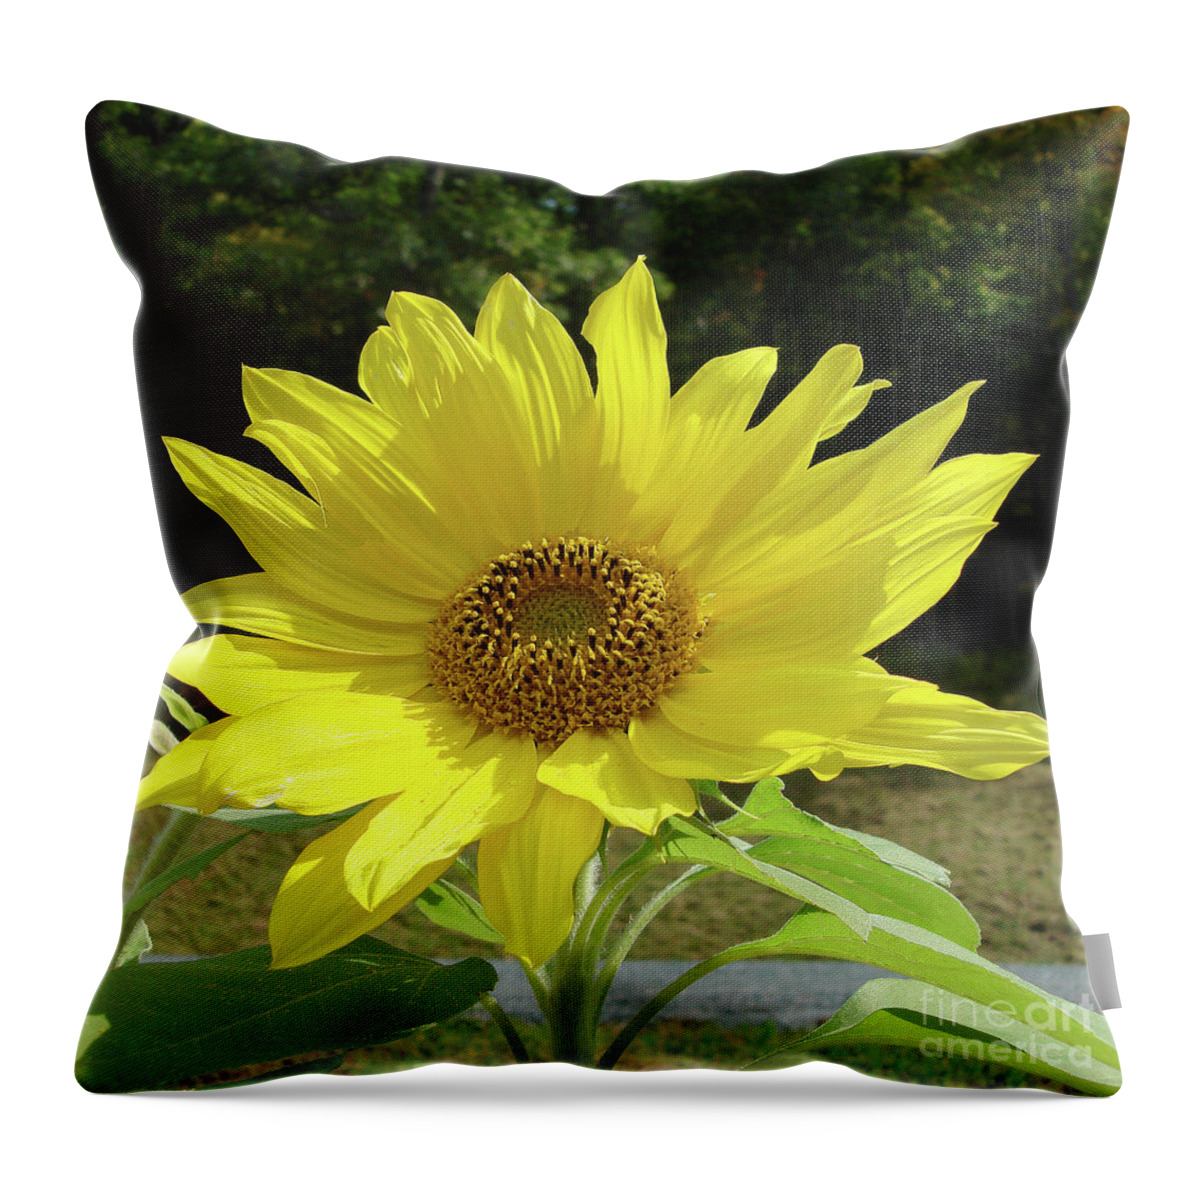 Sunflower Throw Pillow featuring the photograph Sunflower 33 by Amy E Fraser